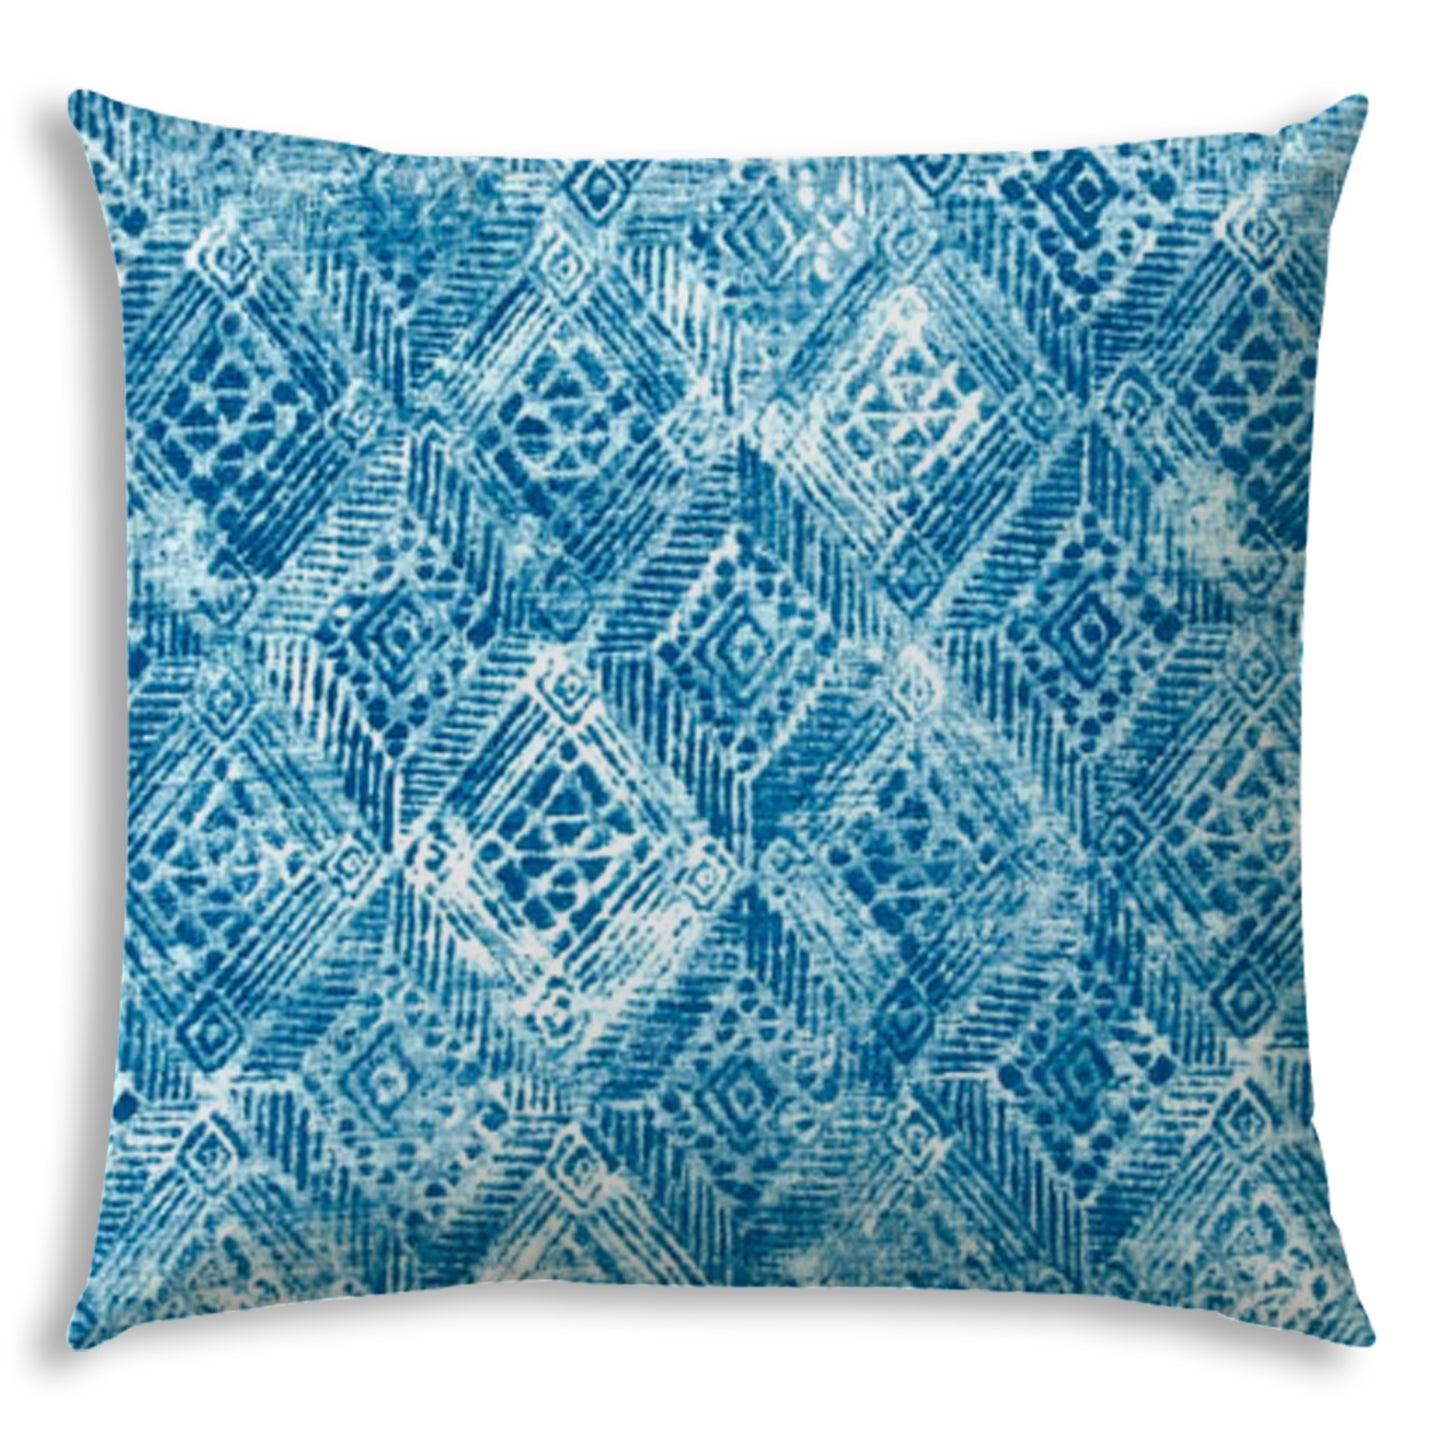 REMEDIA Blue Indoor/Outdoor Pillow - Sewn Closure